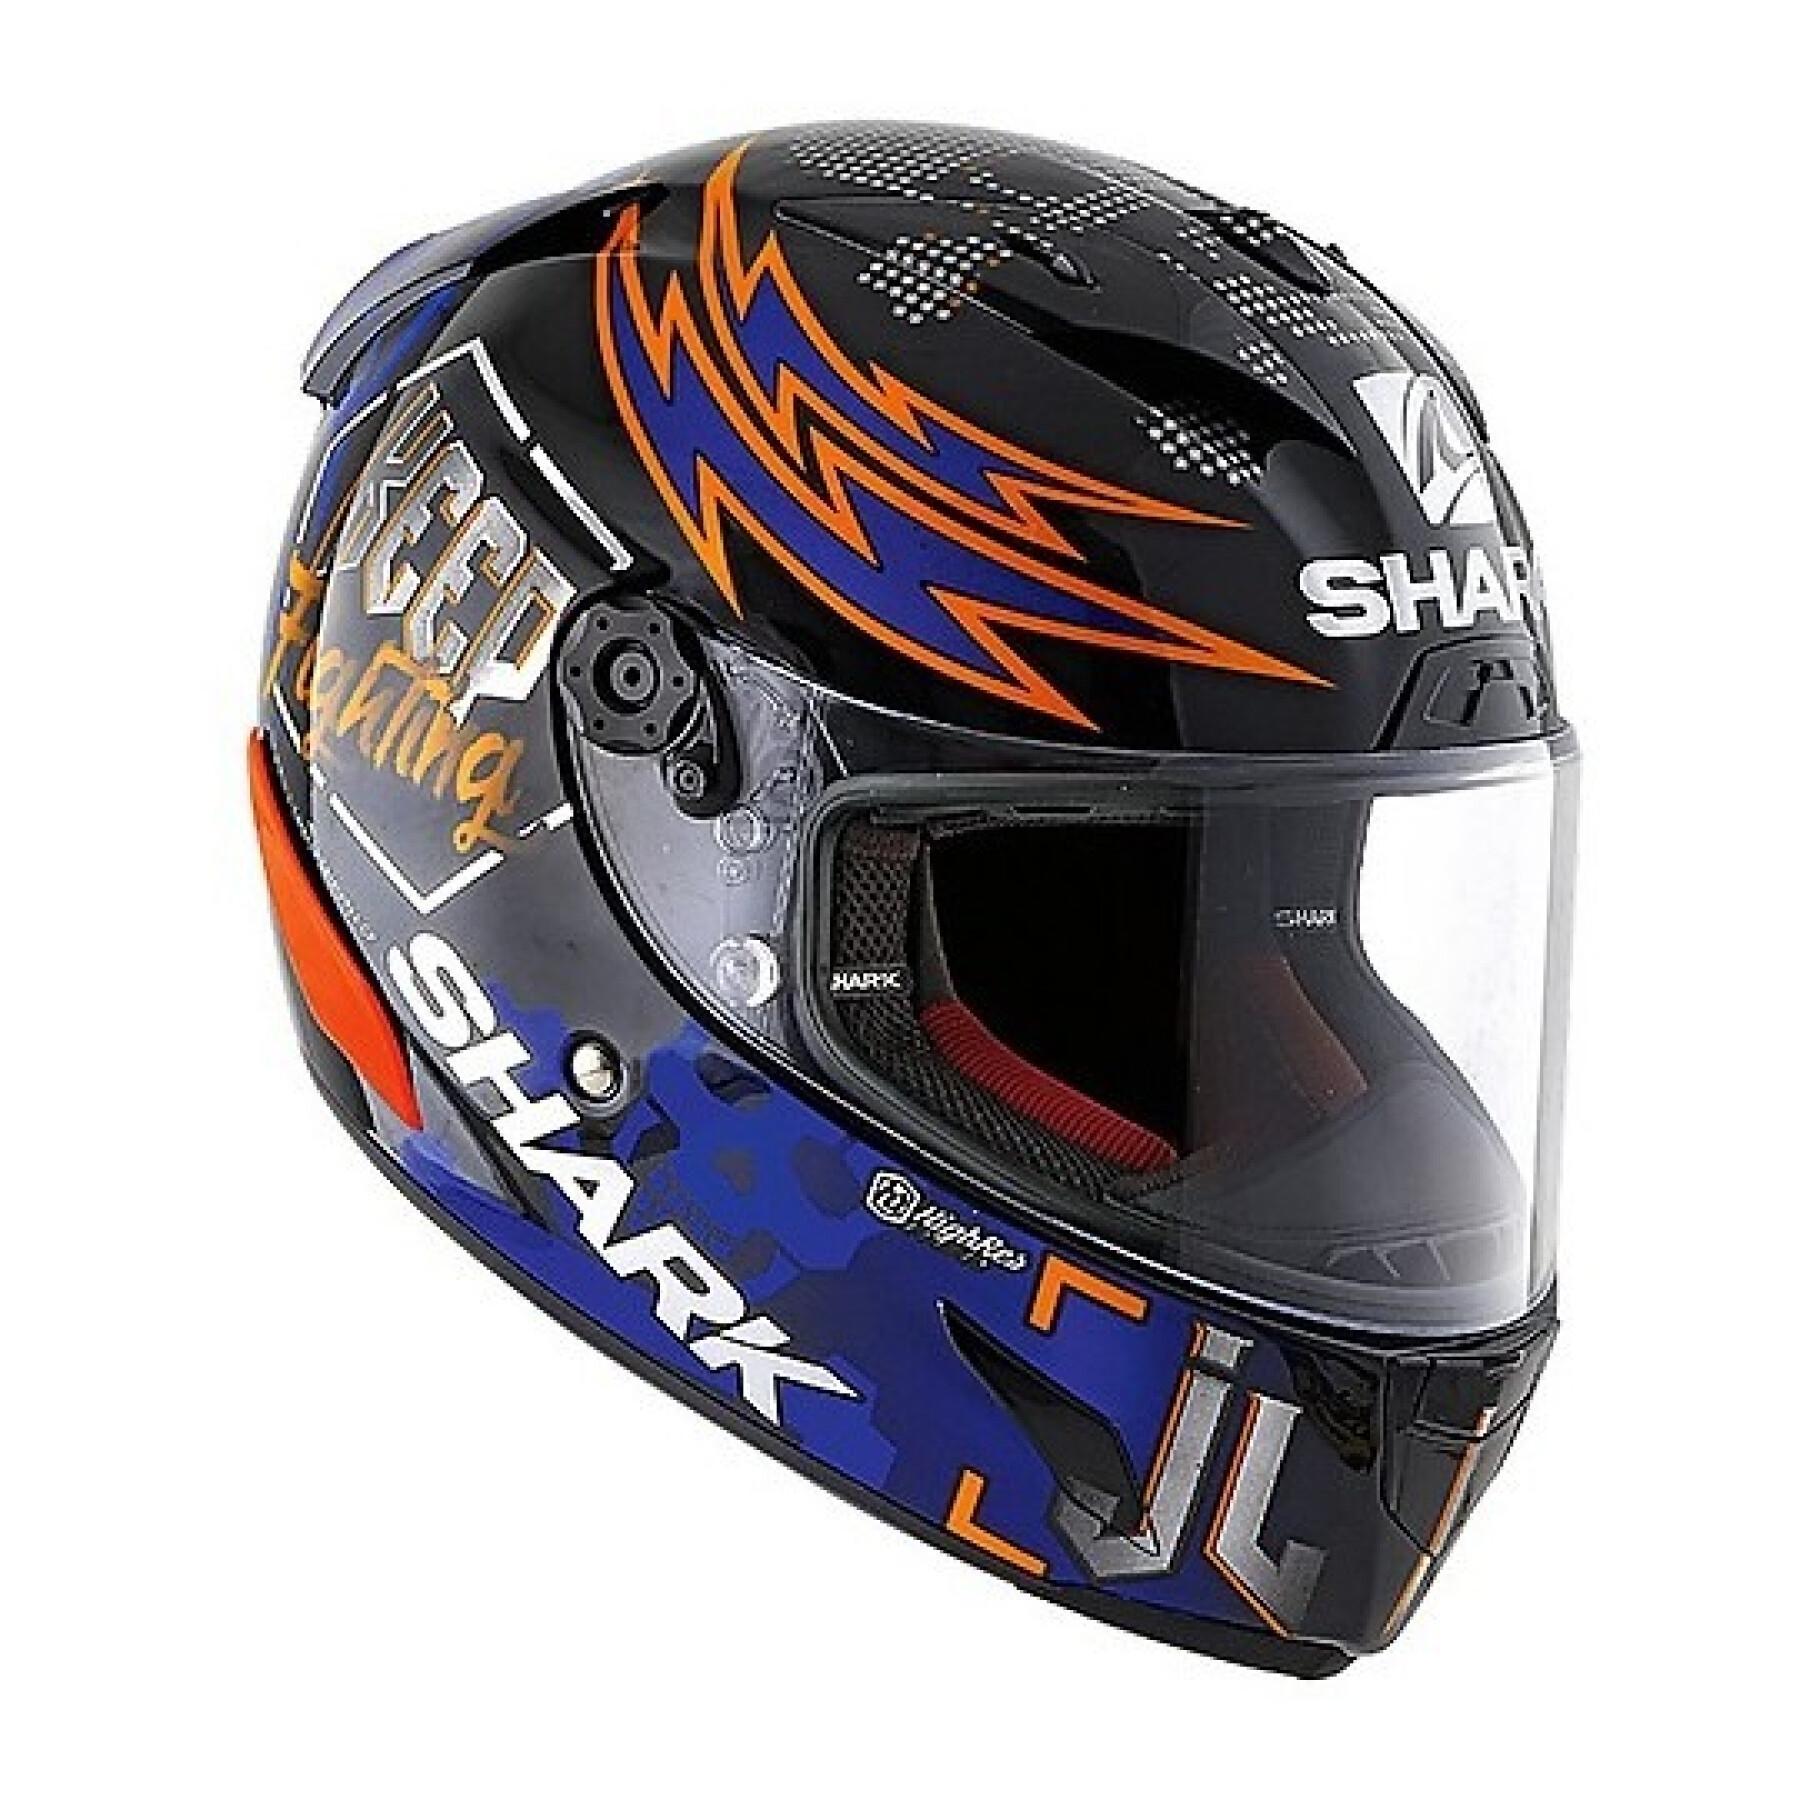 Full face motorcycle helmet Shark race-r pro lorenzo catalunya GP 2019 GP